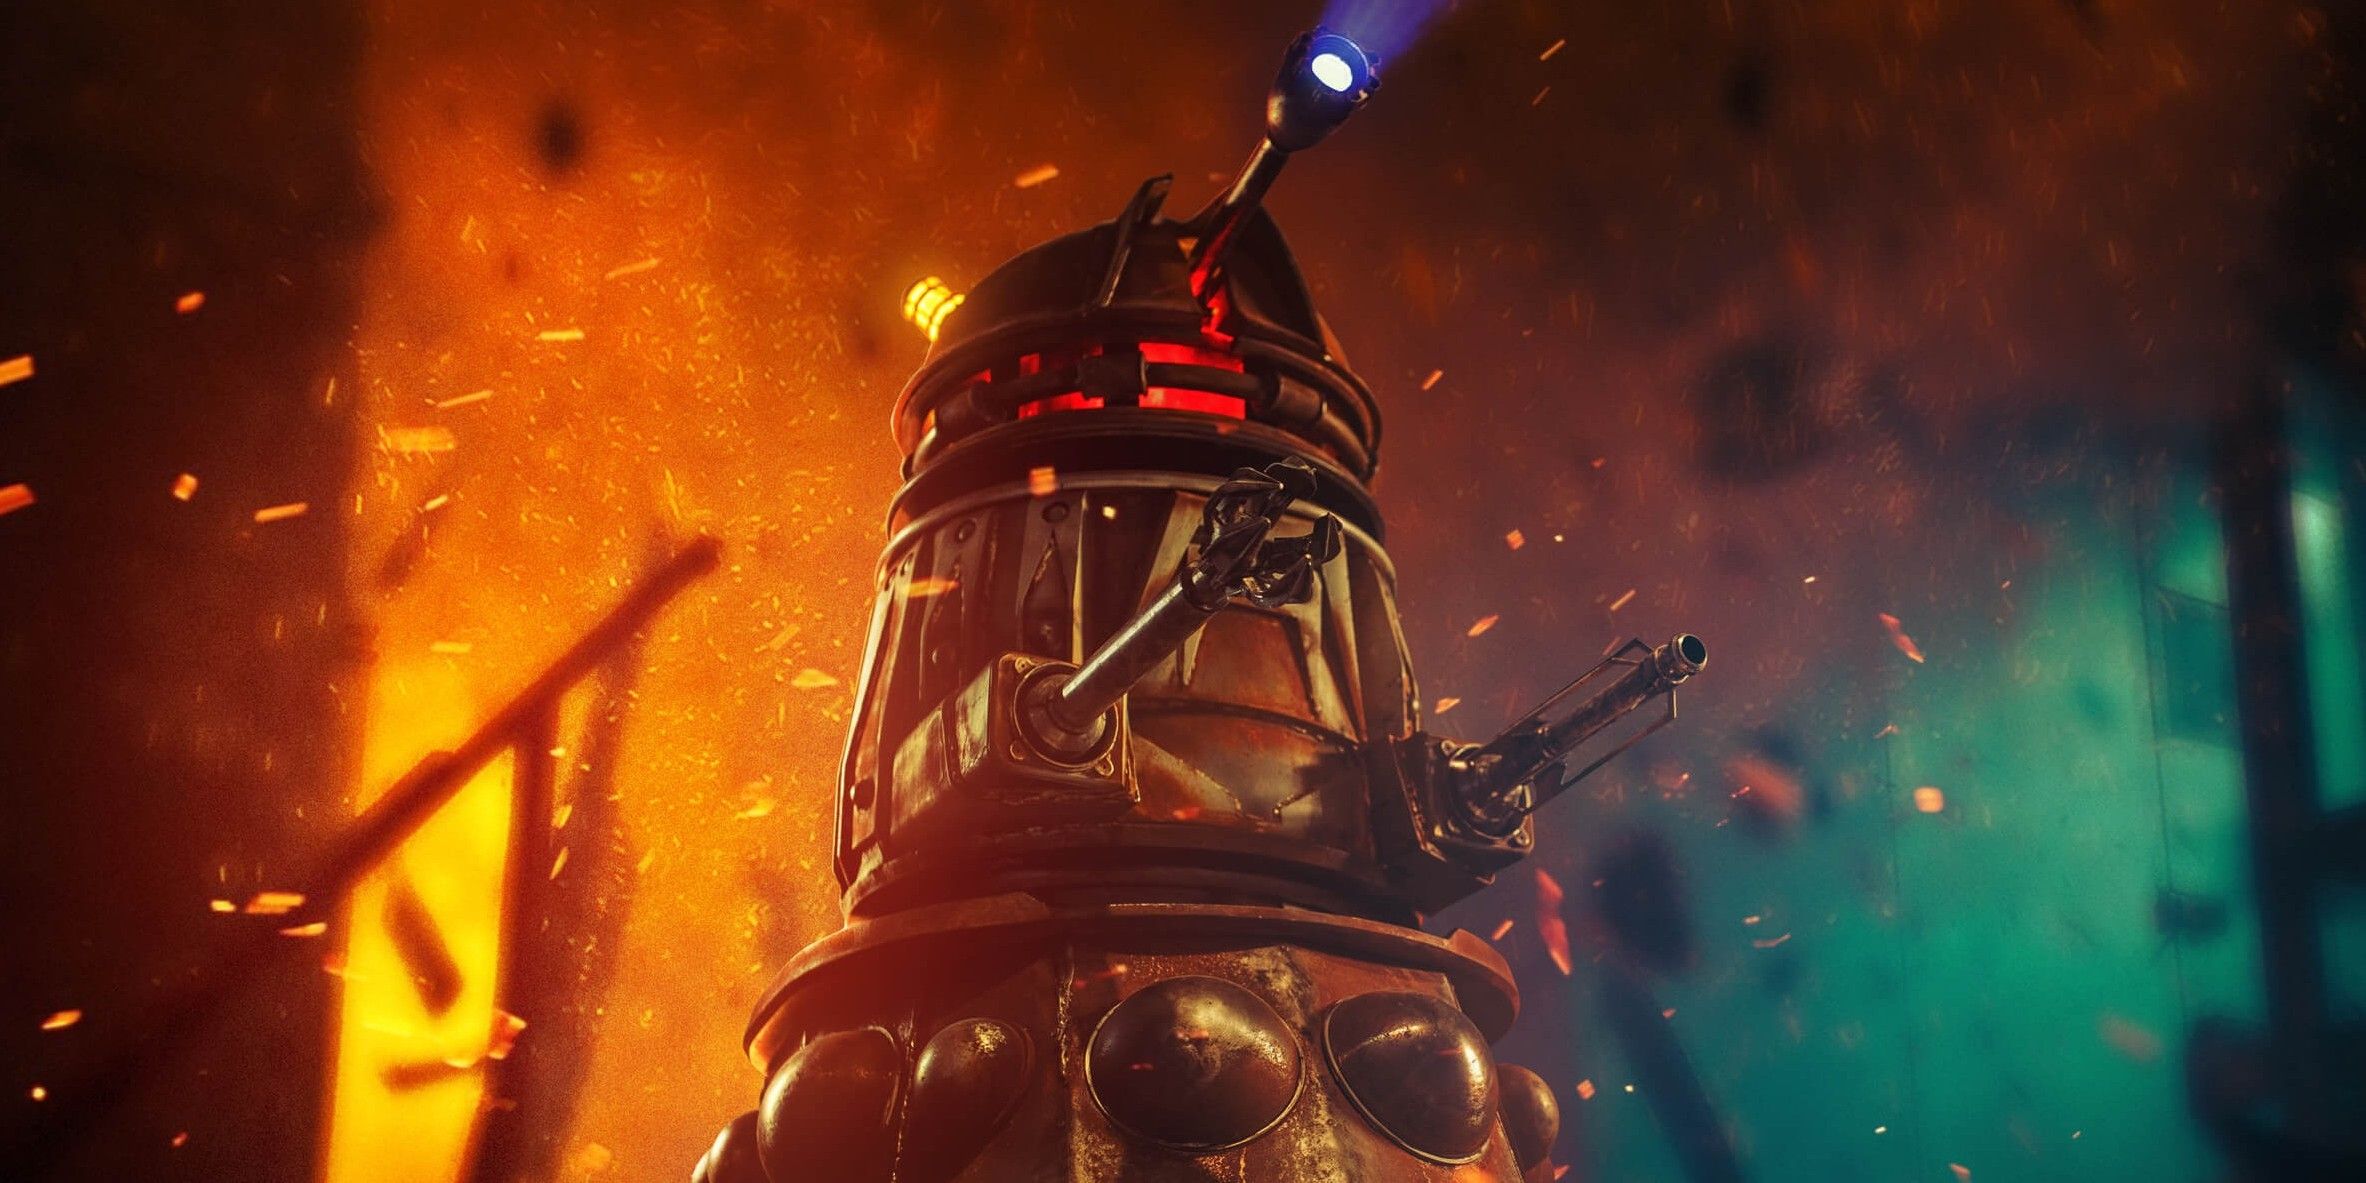 Reconnaissance Dalek seeking amongst fire and exploding debris